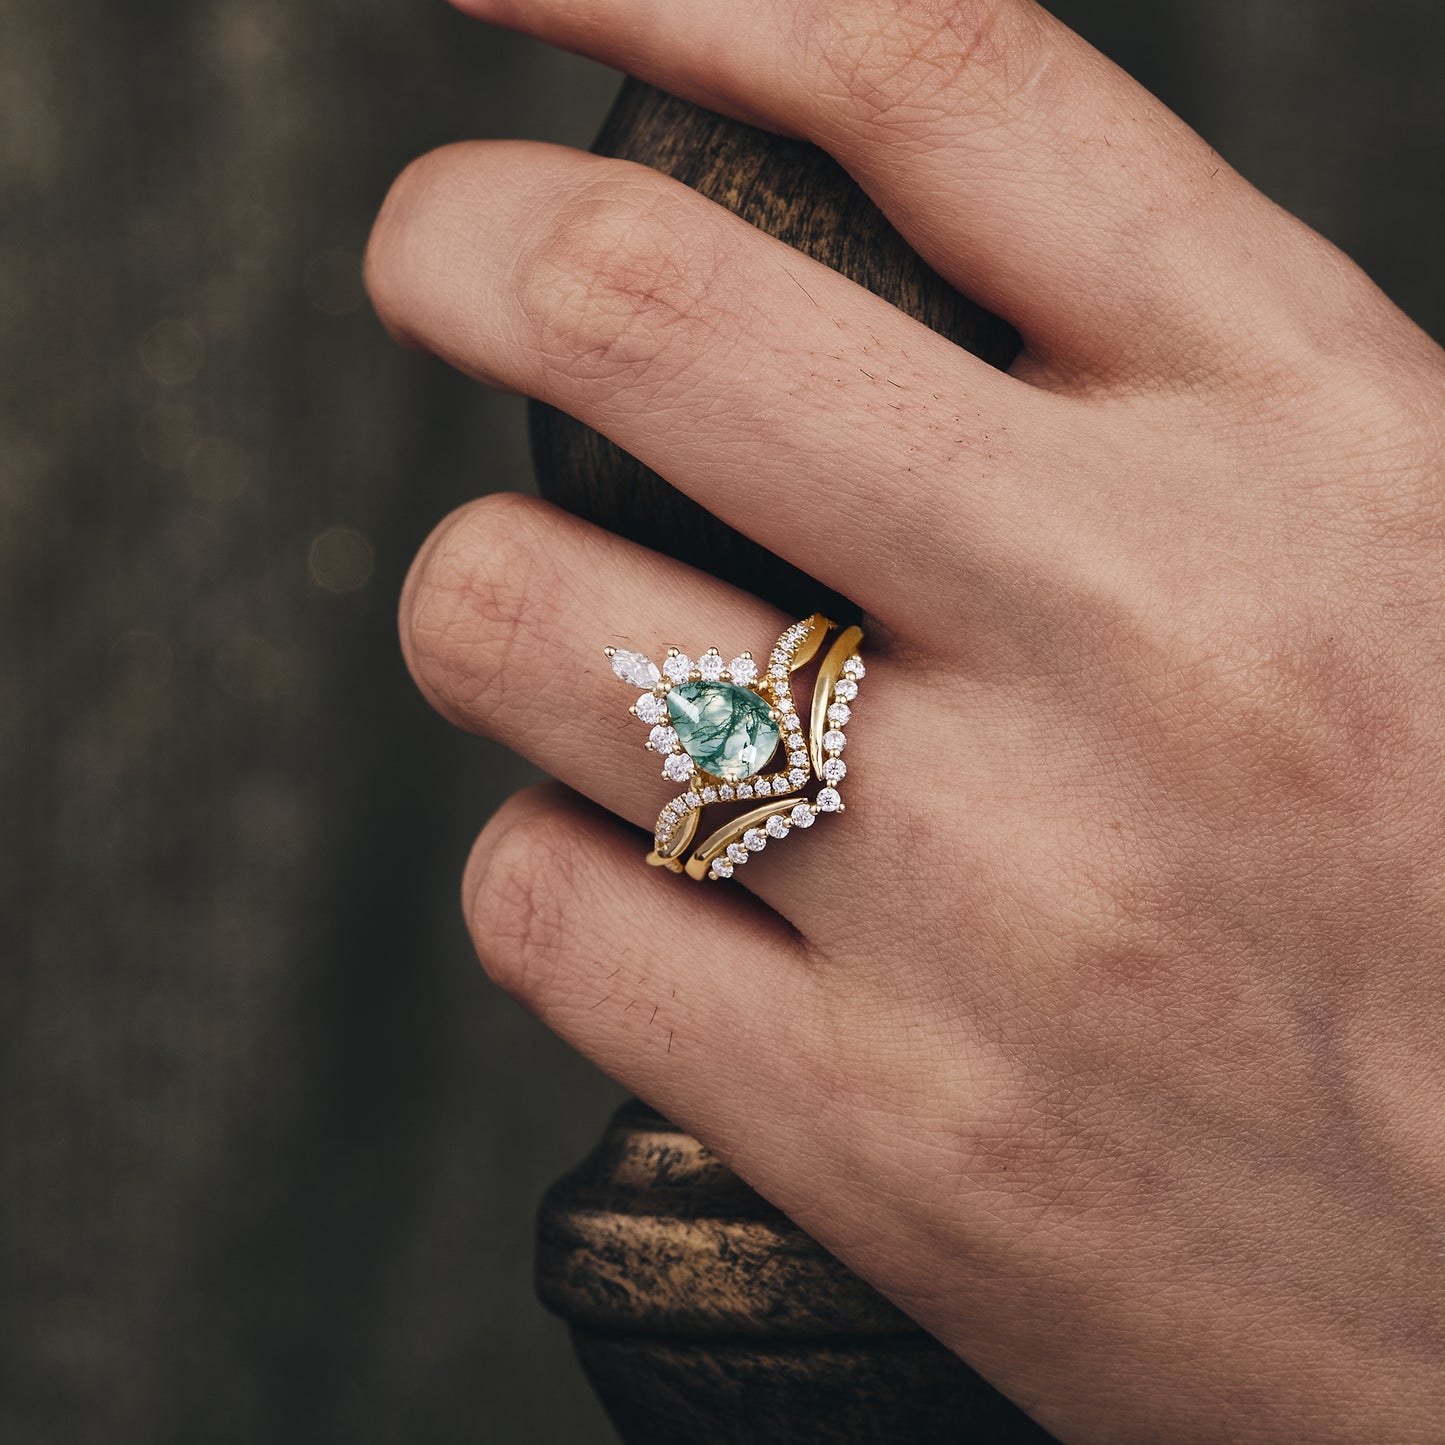 GemsMagic Crown Inspired Moss Agate Ring Set 2pcs